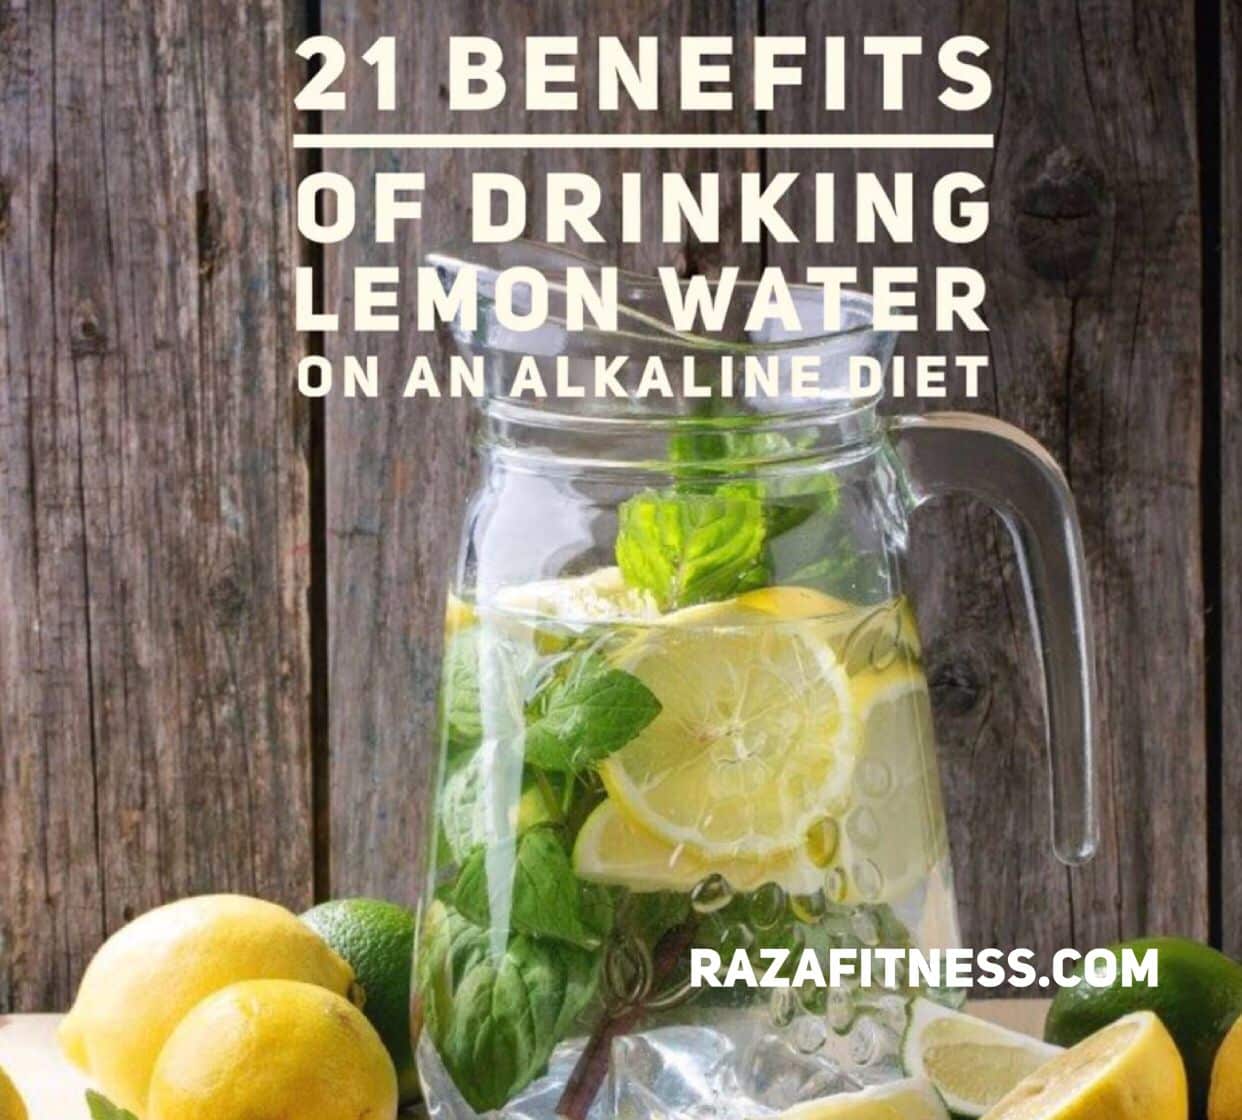 21 Benefits of Drinking Lemon Water